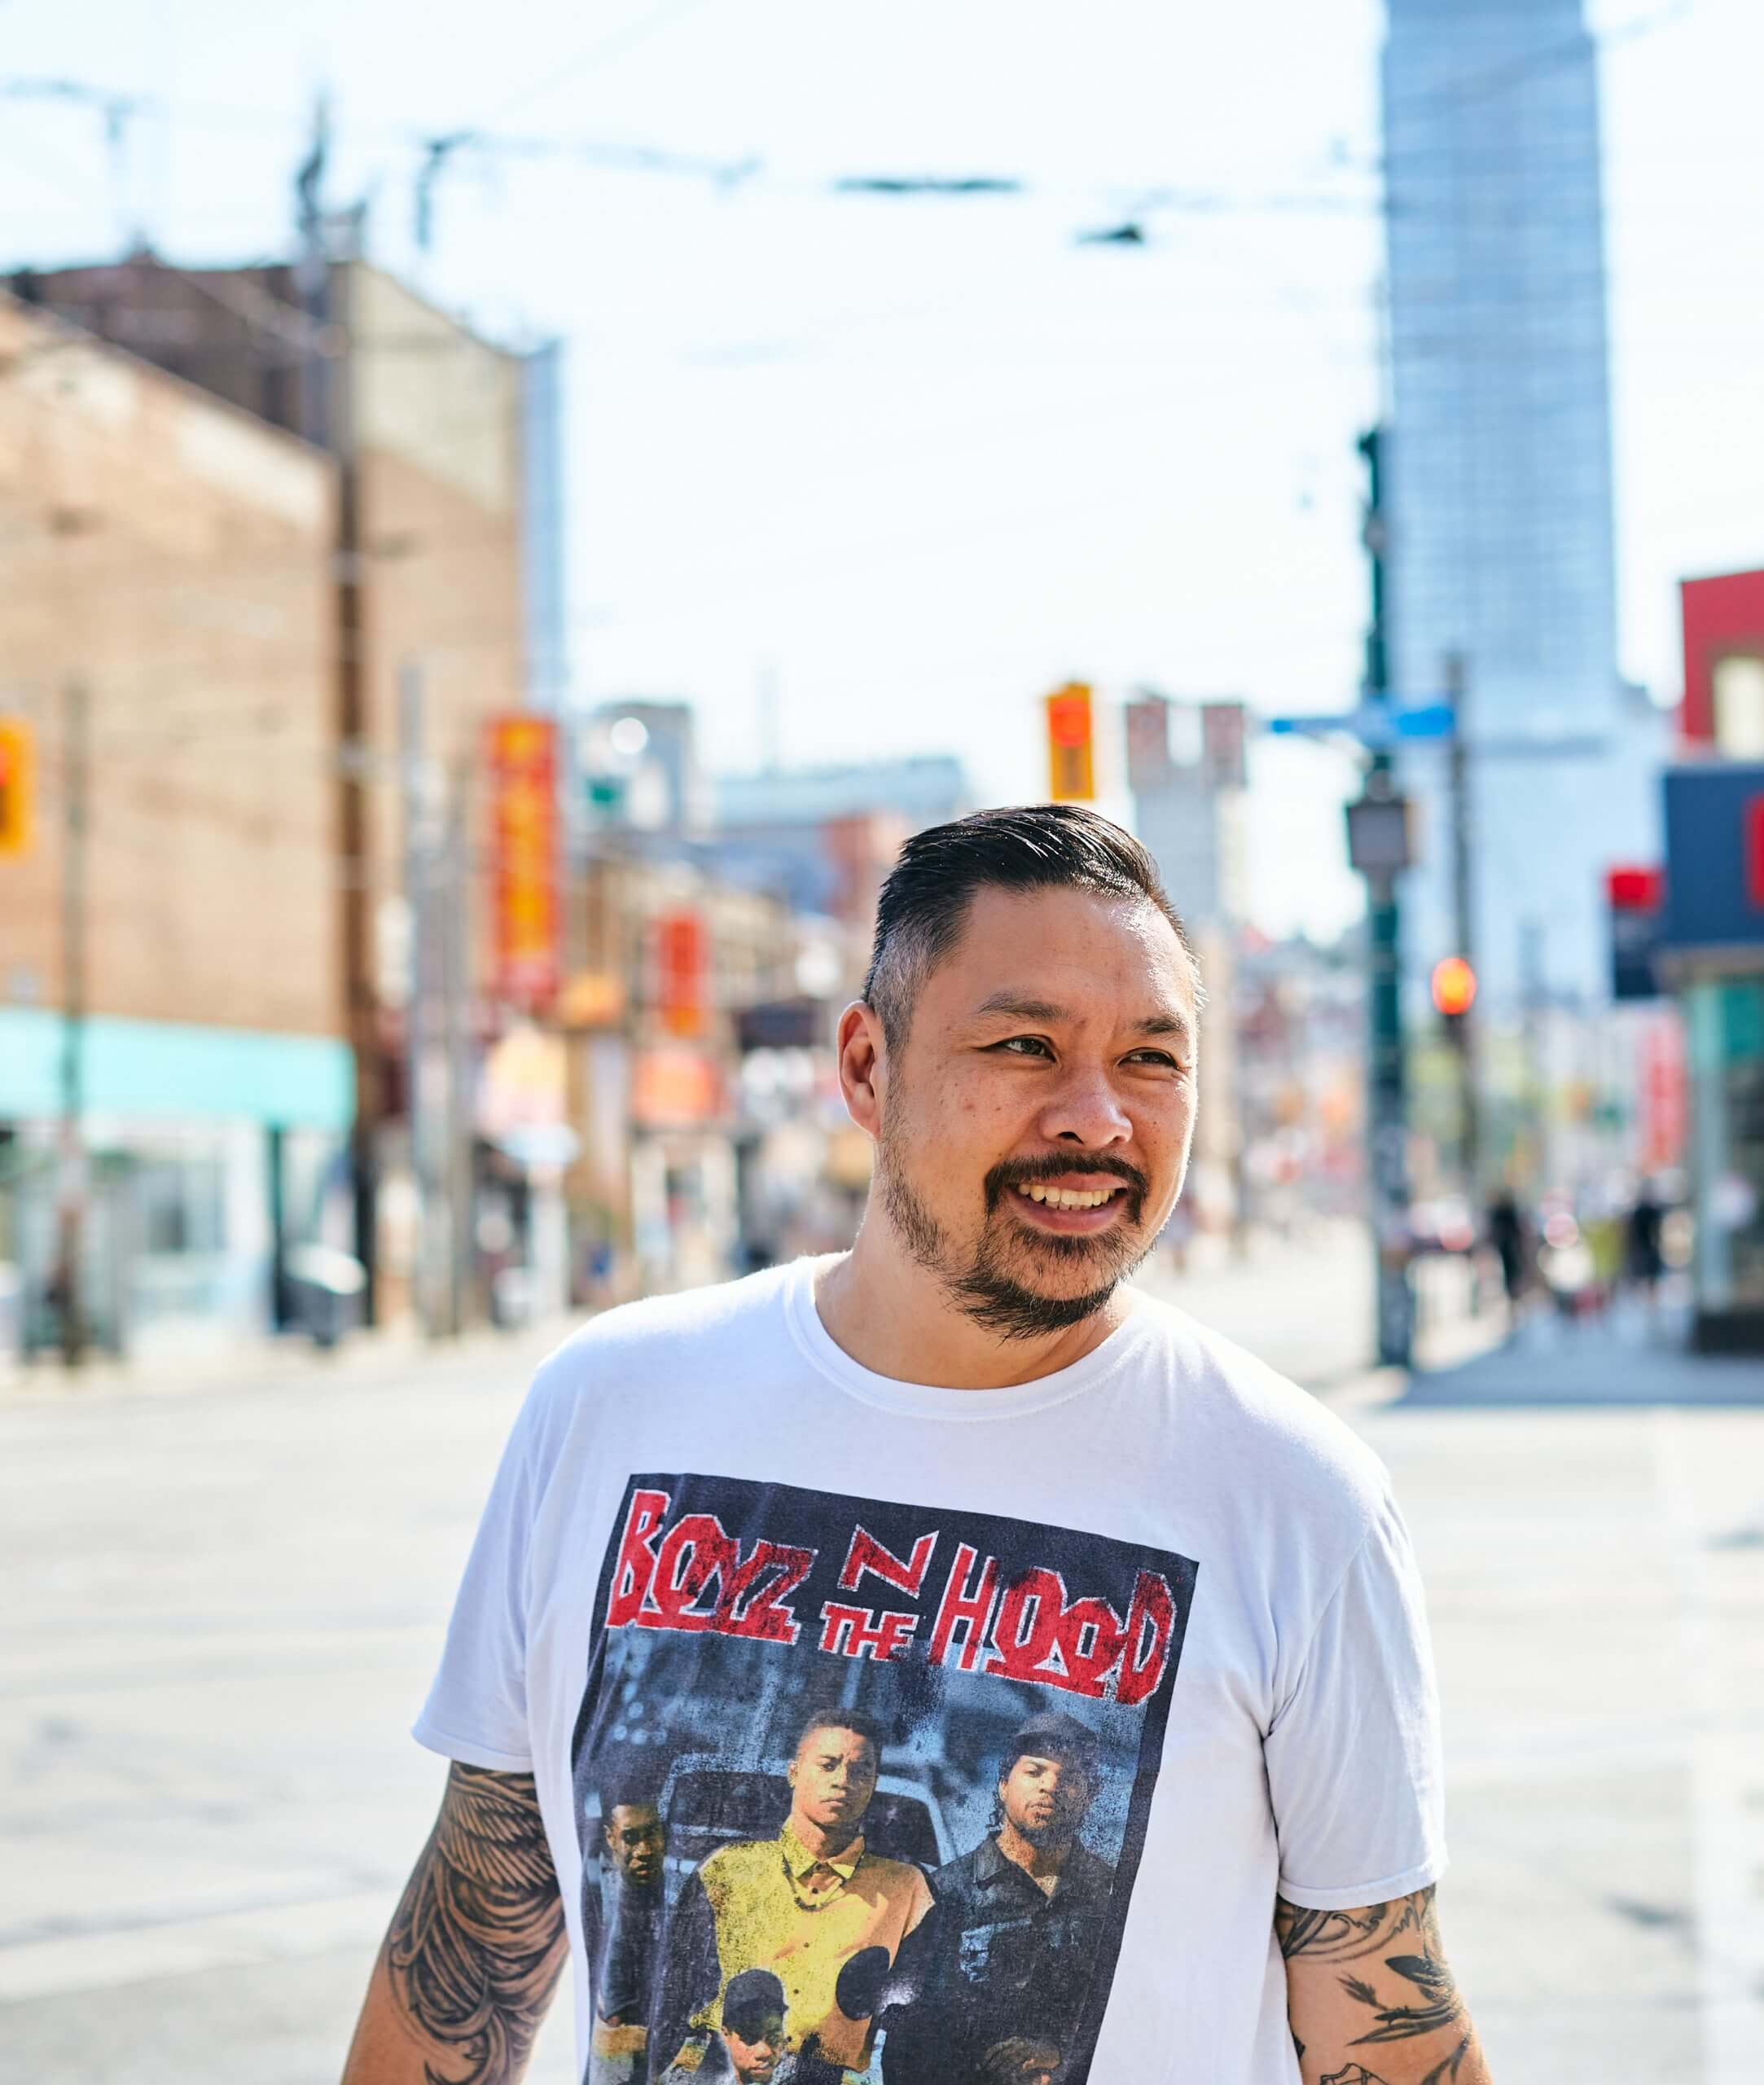 Trevor Lui, wearing a "Boyz N The Hood" Tshirt, smiles on a Toronto street.